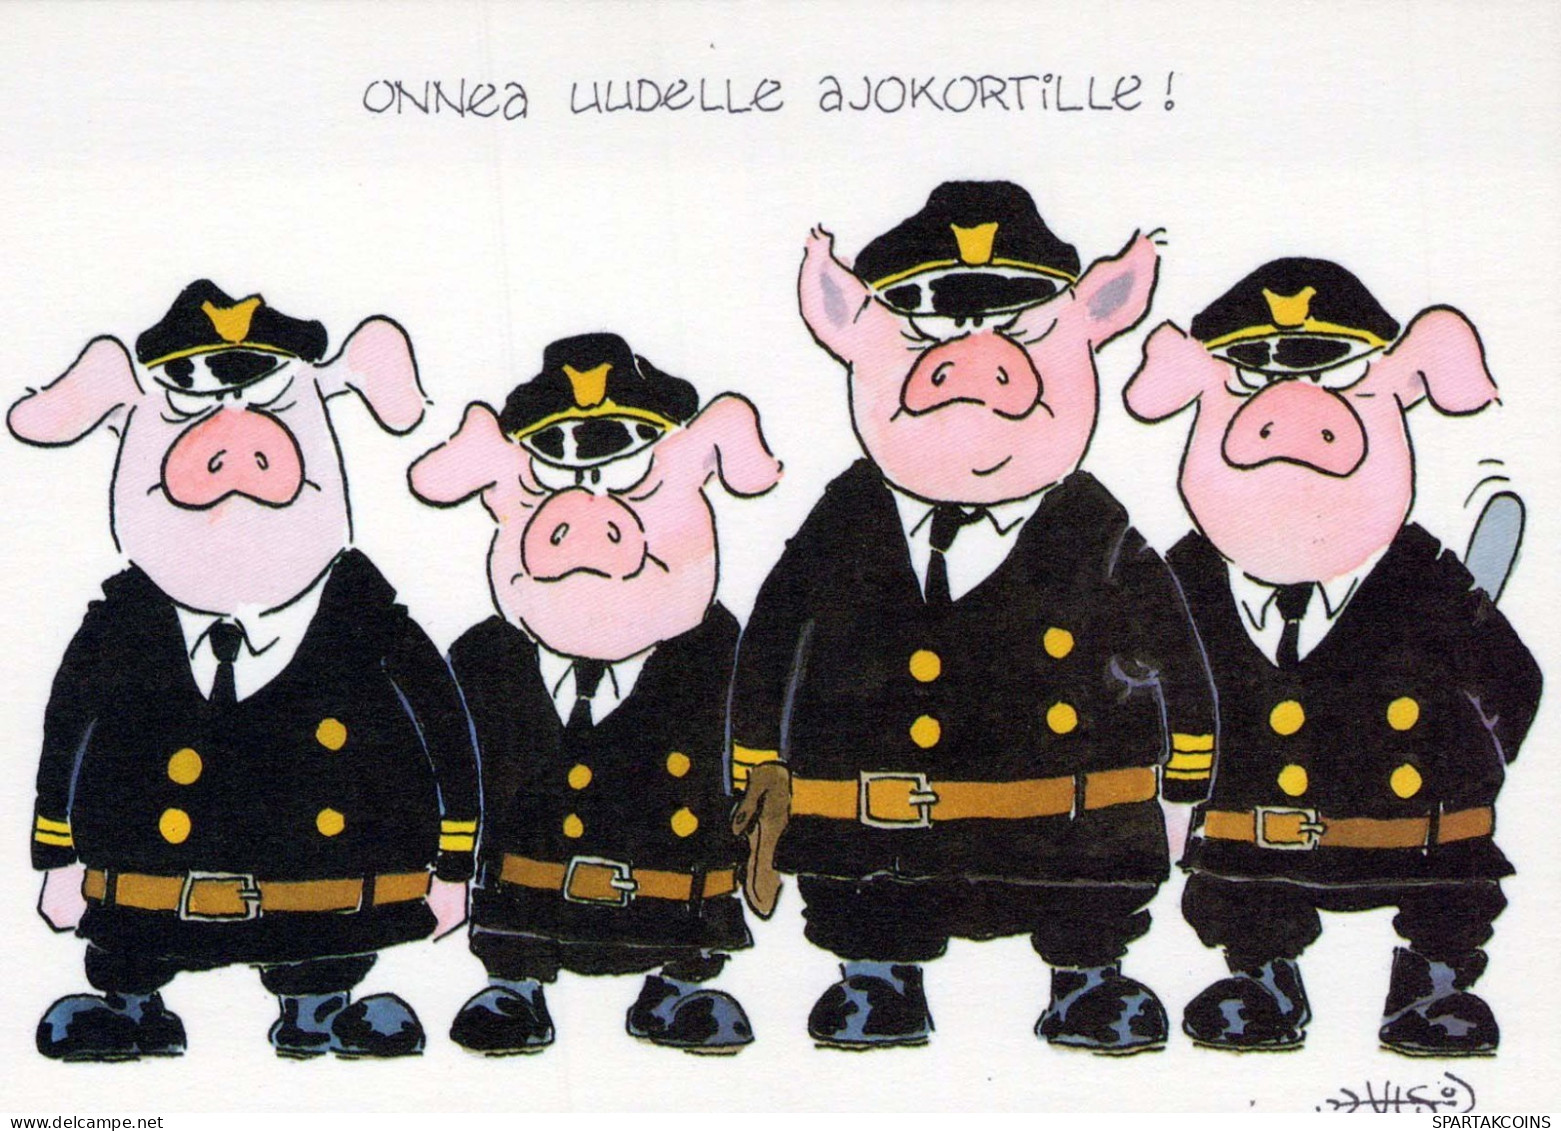 PORCS Animaux Vintage Carte Postale CPSM #PBR747.A - Schweine